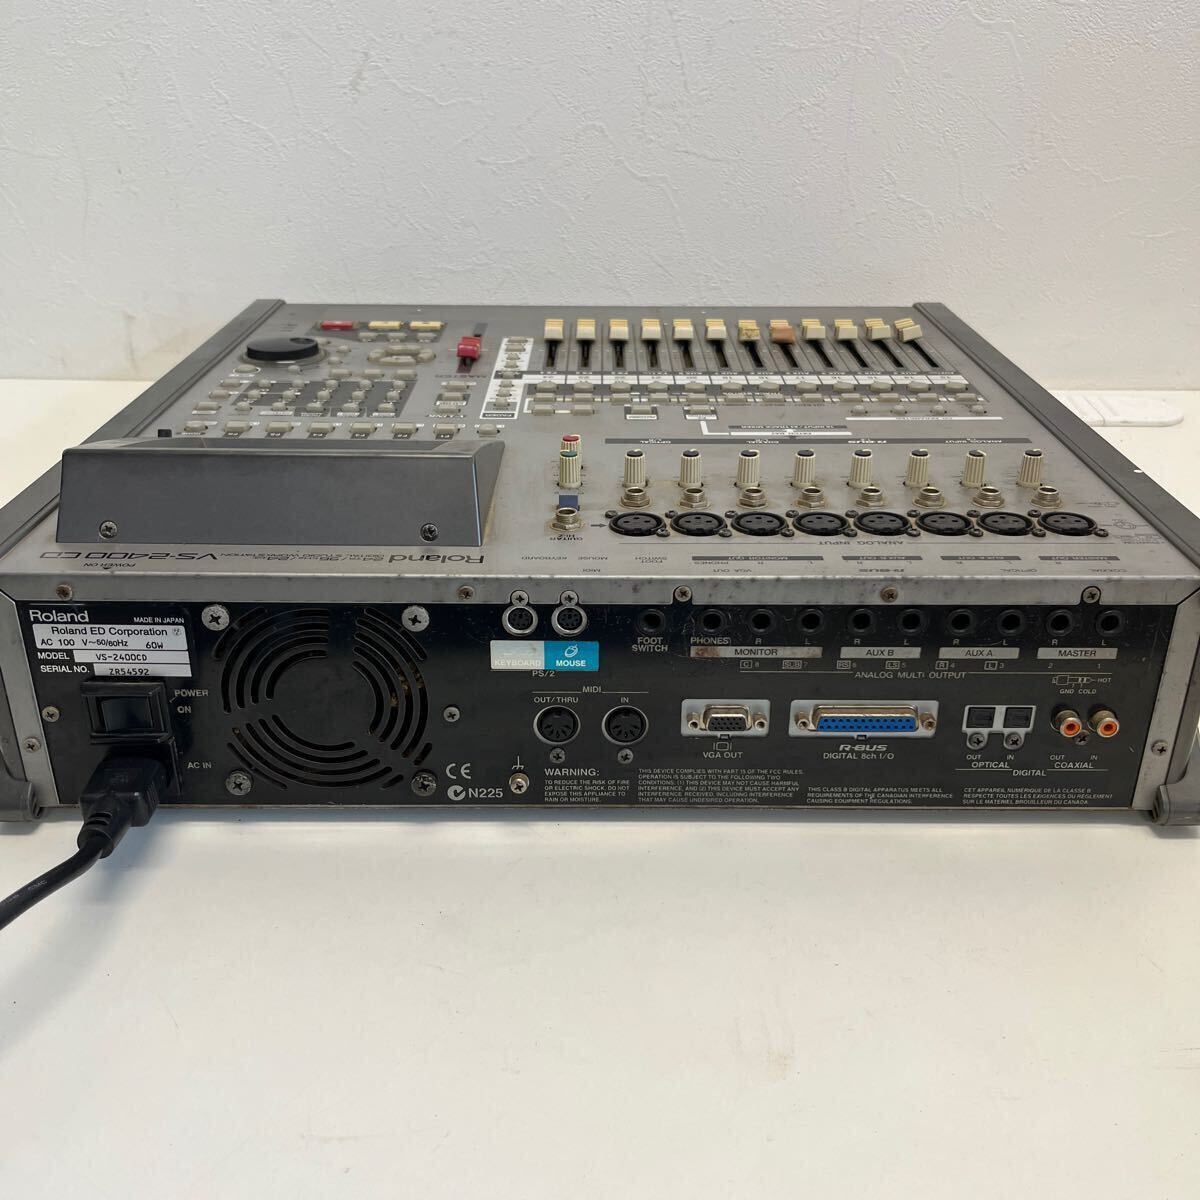 1 jpy start Roland multitrack recorder VS-2400CD Roland digital Studio sound equipment recording Studio equipment recording 